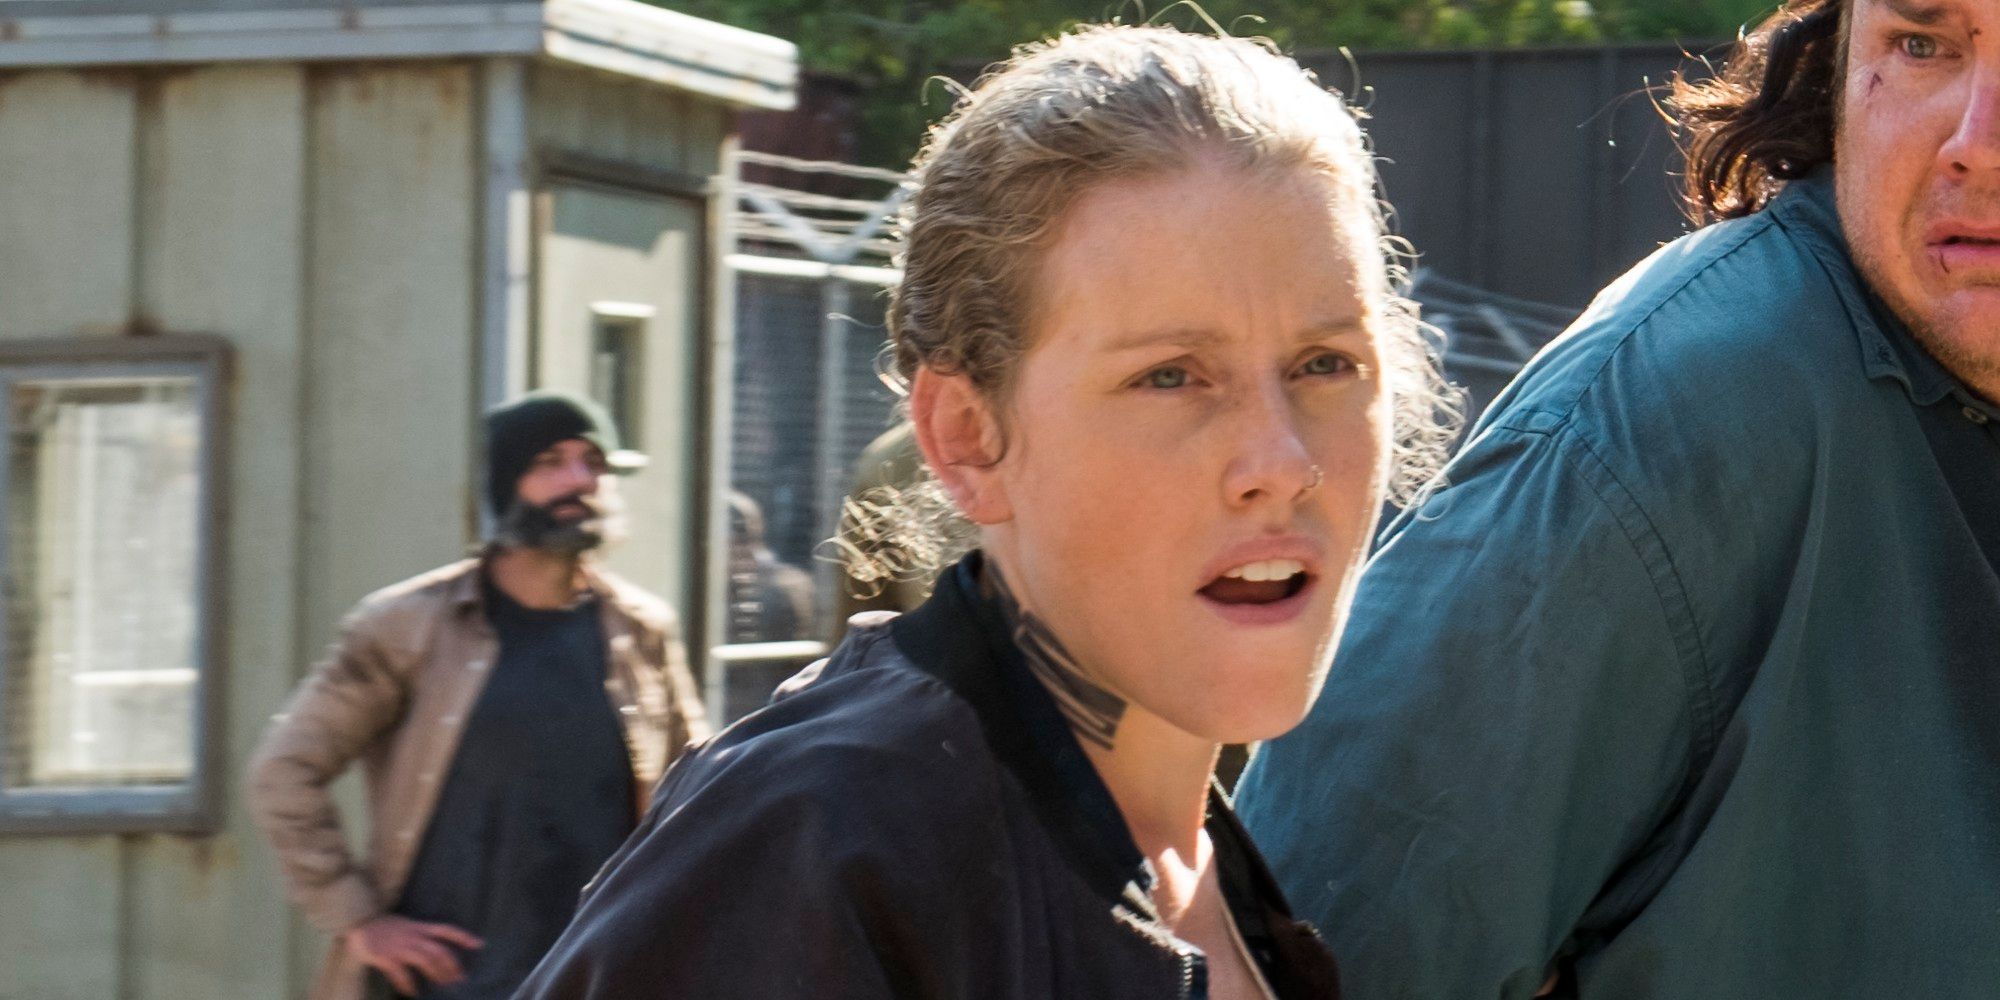 Lindsley Register as Laura in The Walking Dead